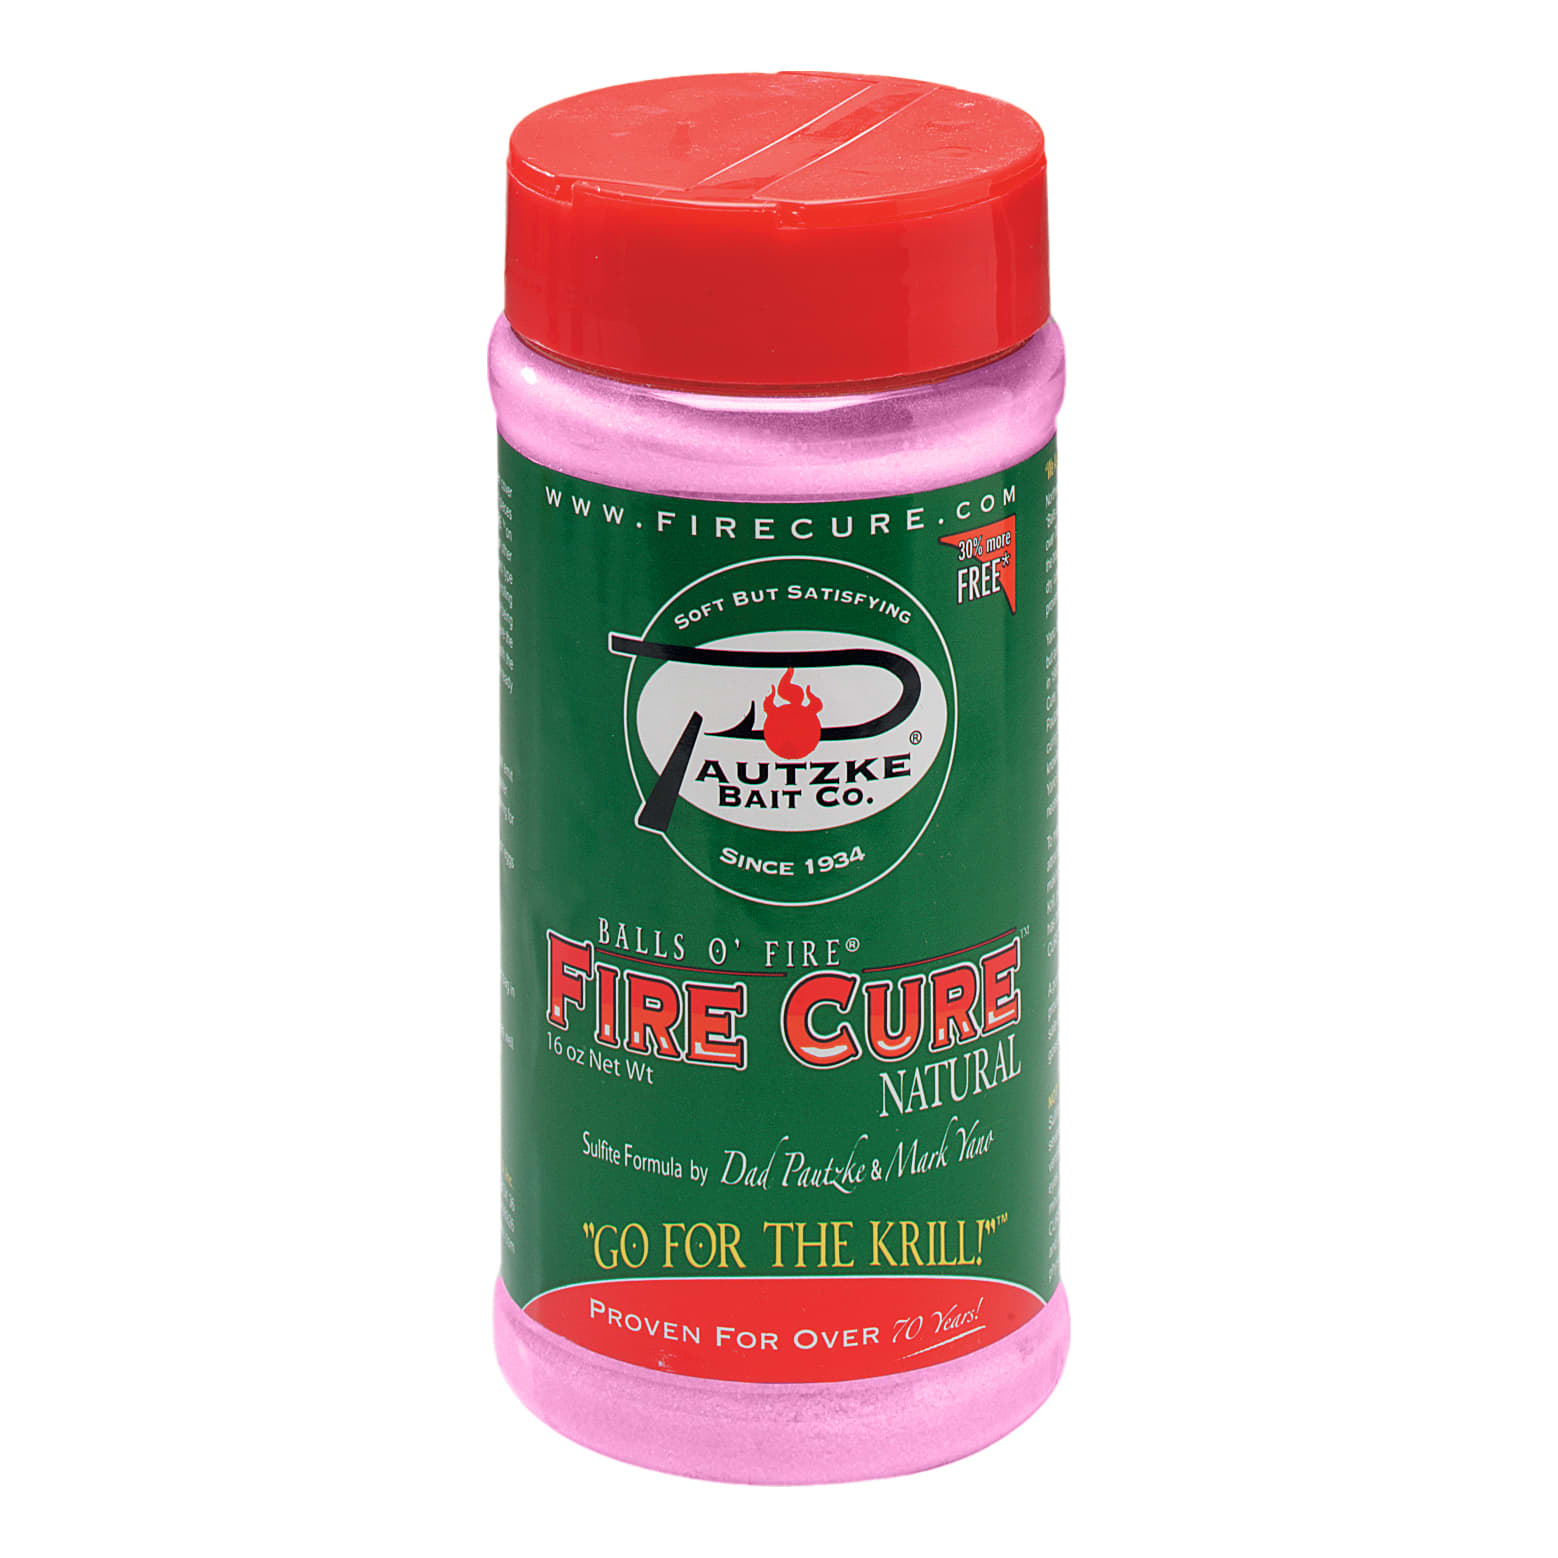 Pautzke Bait Co. Fire Cure Egg Cure - Pink